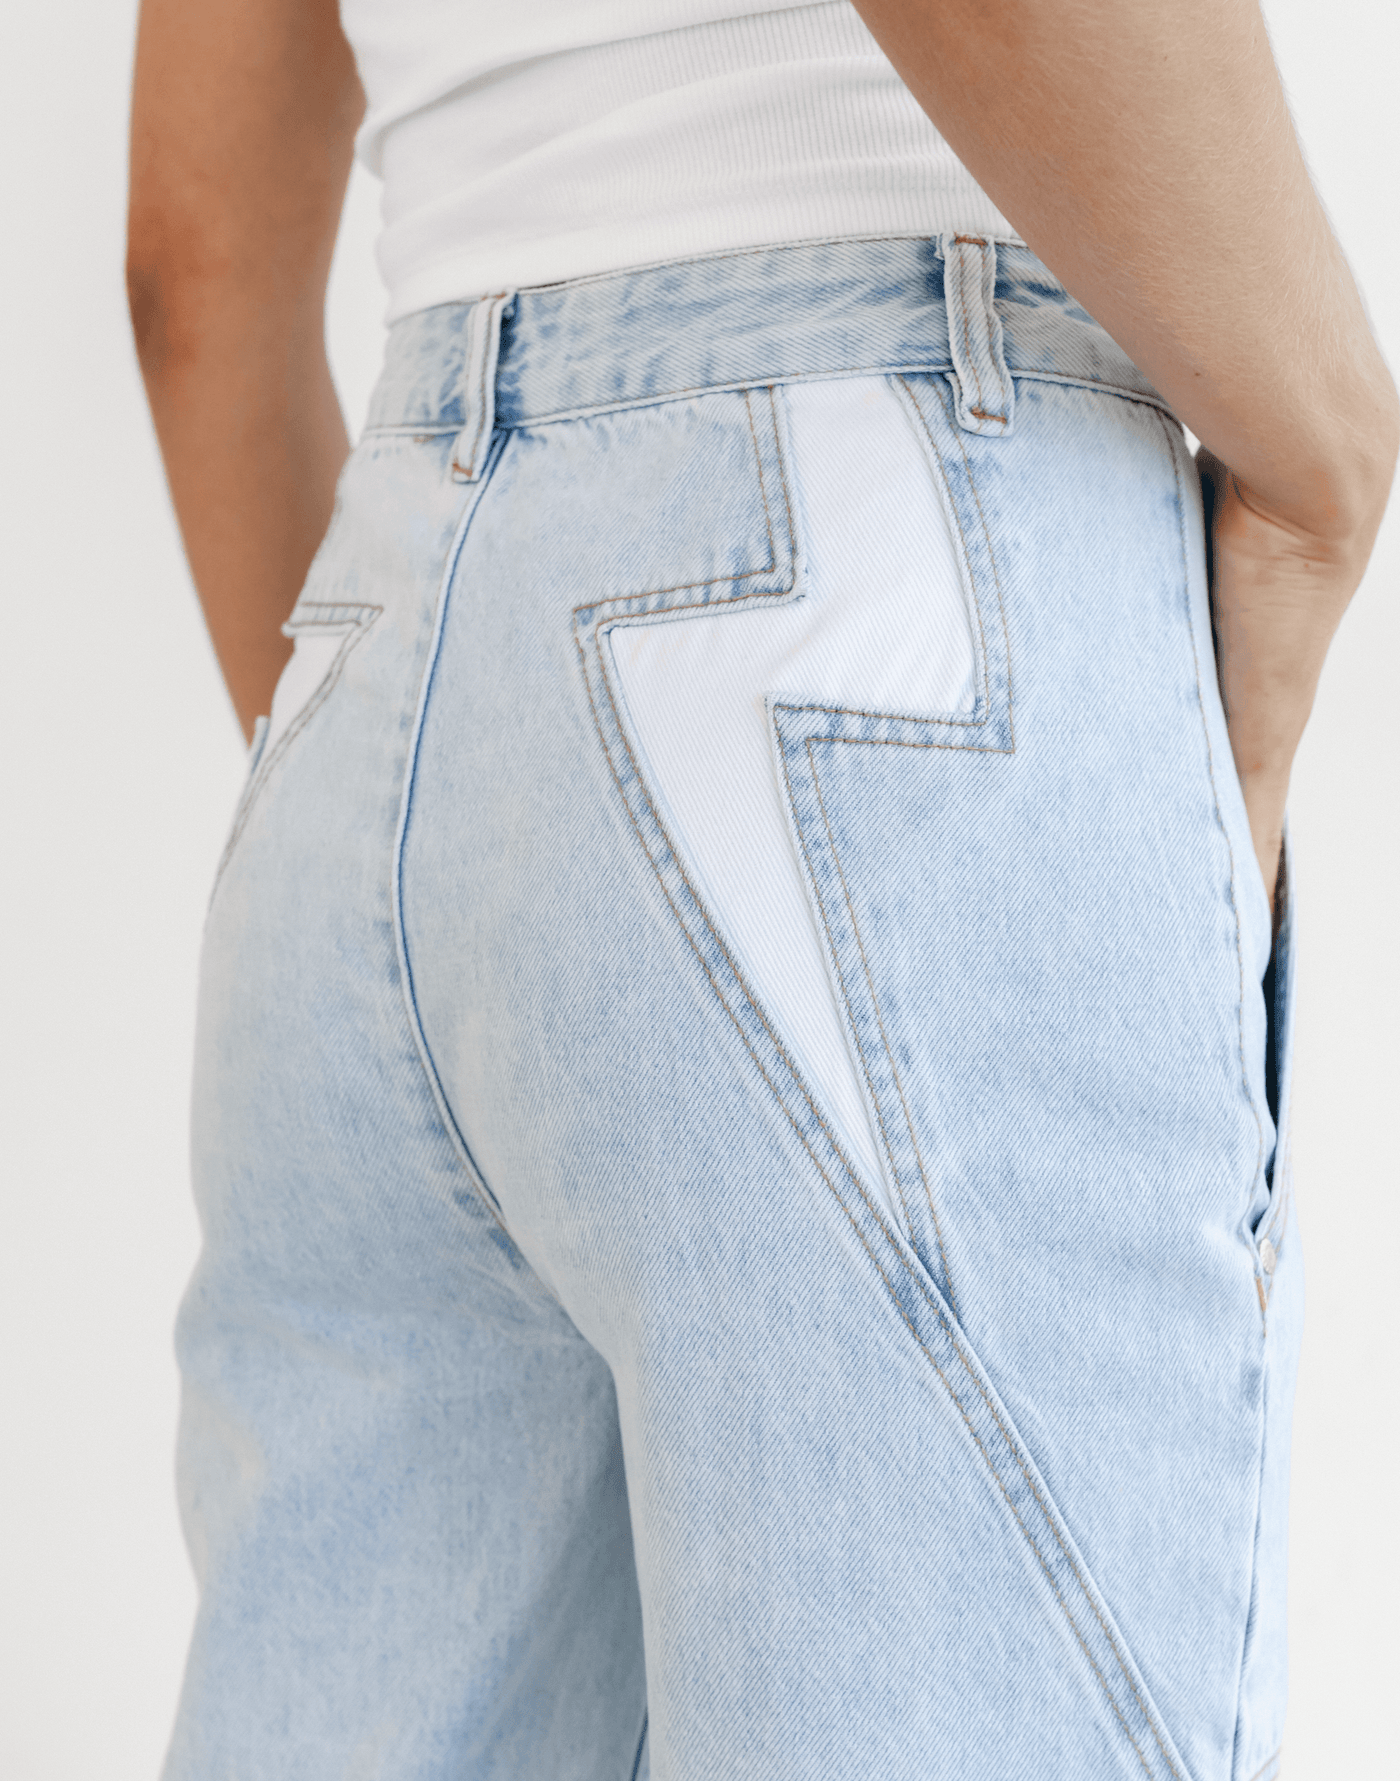 Rizzo Jeans (Light Blue) - Blue Denim Jeans - Women's Pants - Charcoal Clothing